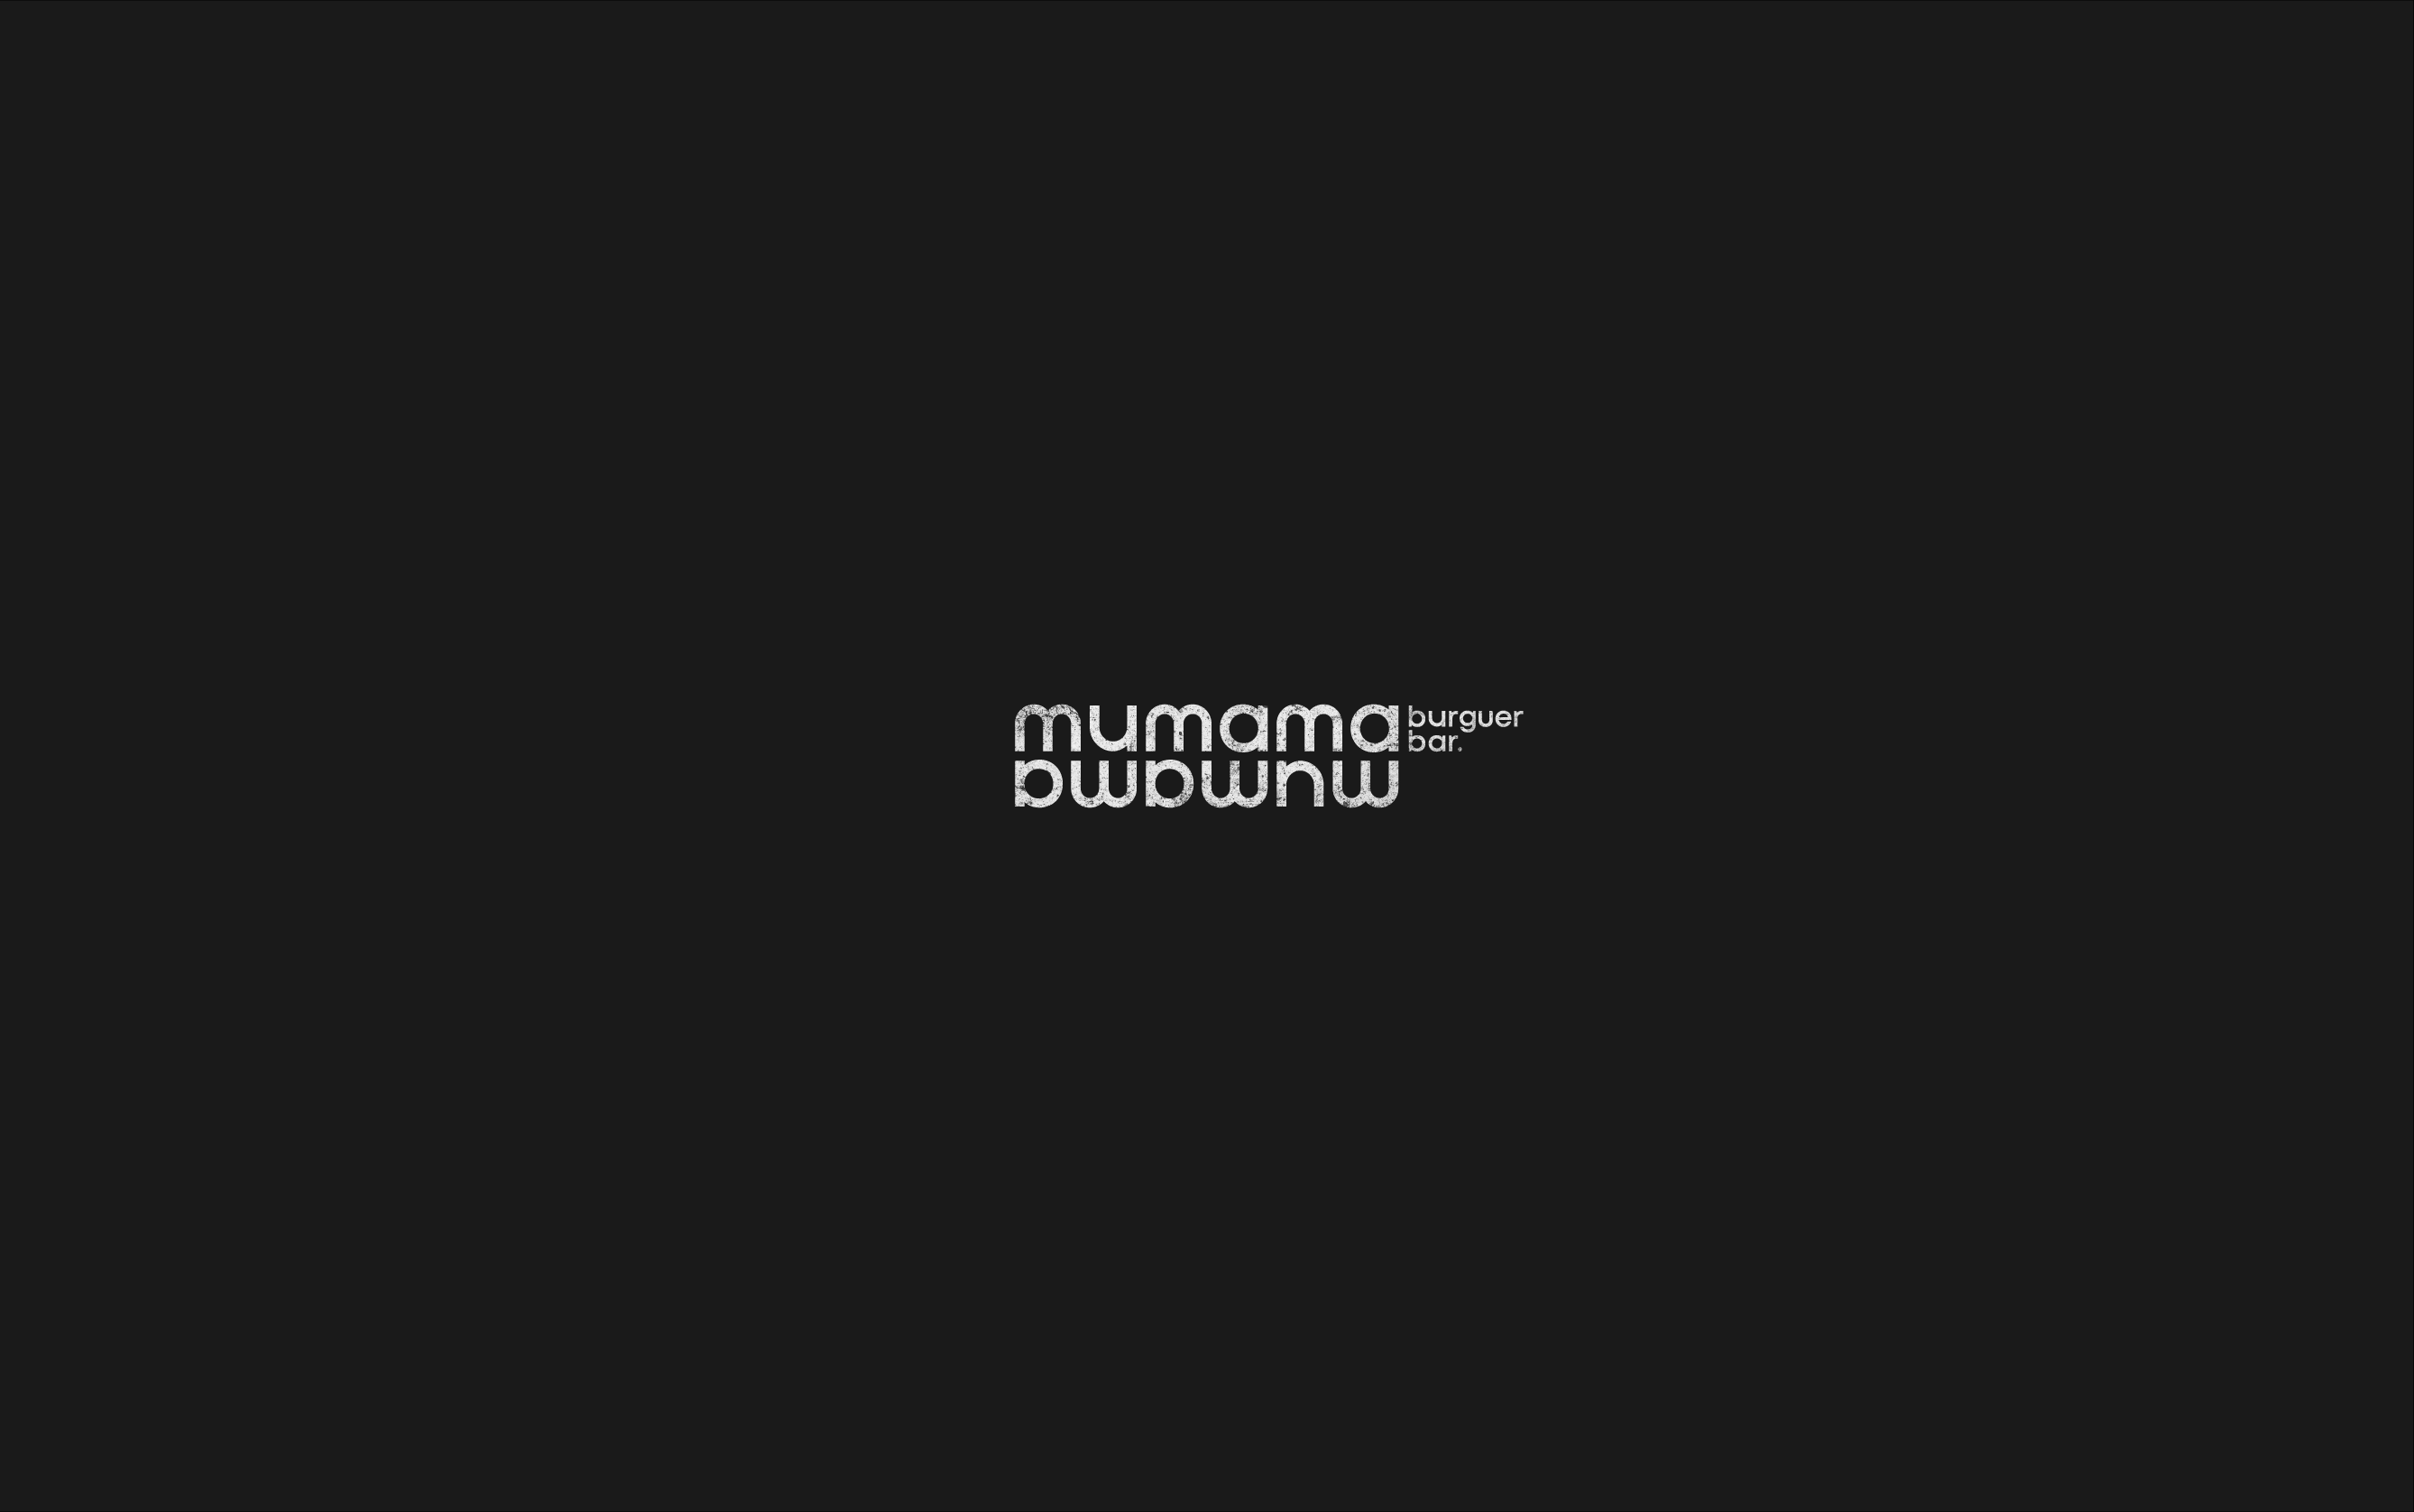 MUMAMA-_-Present-01